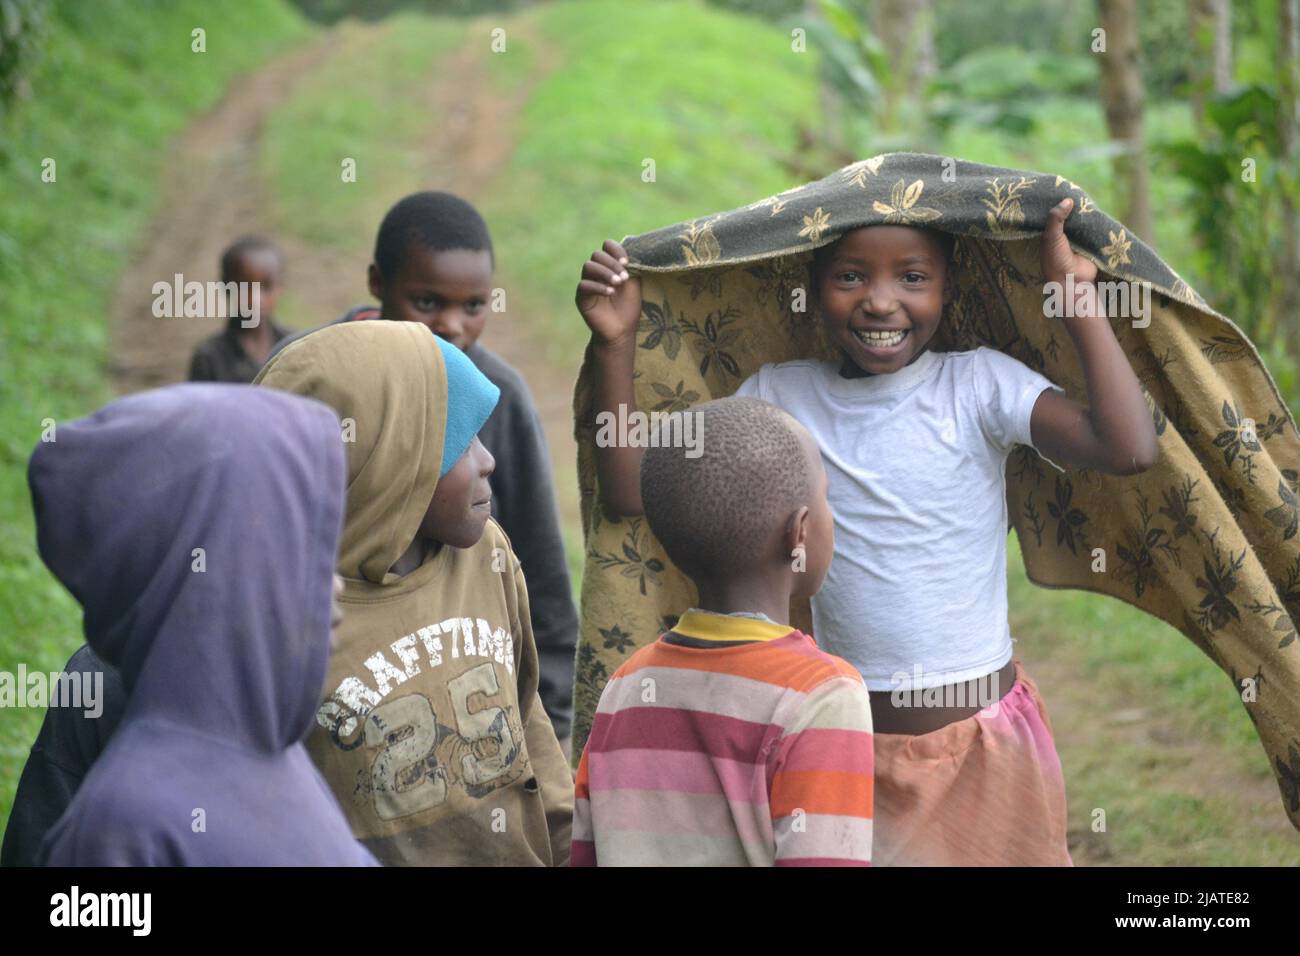 Il sorriso di un bambino in Africa- Ein Kinderlächeln in Afrika Foto Stock